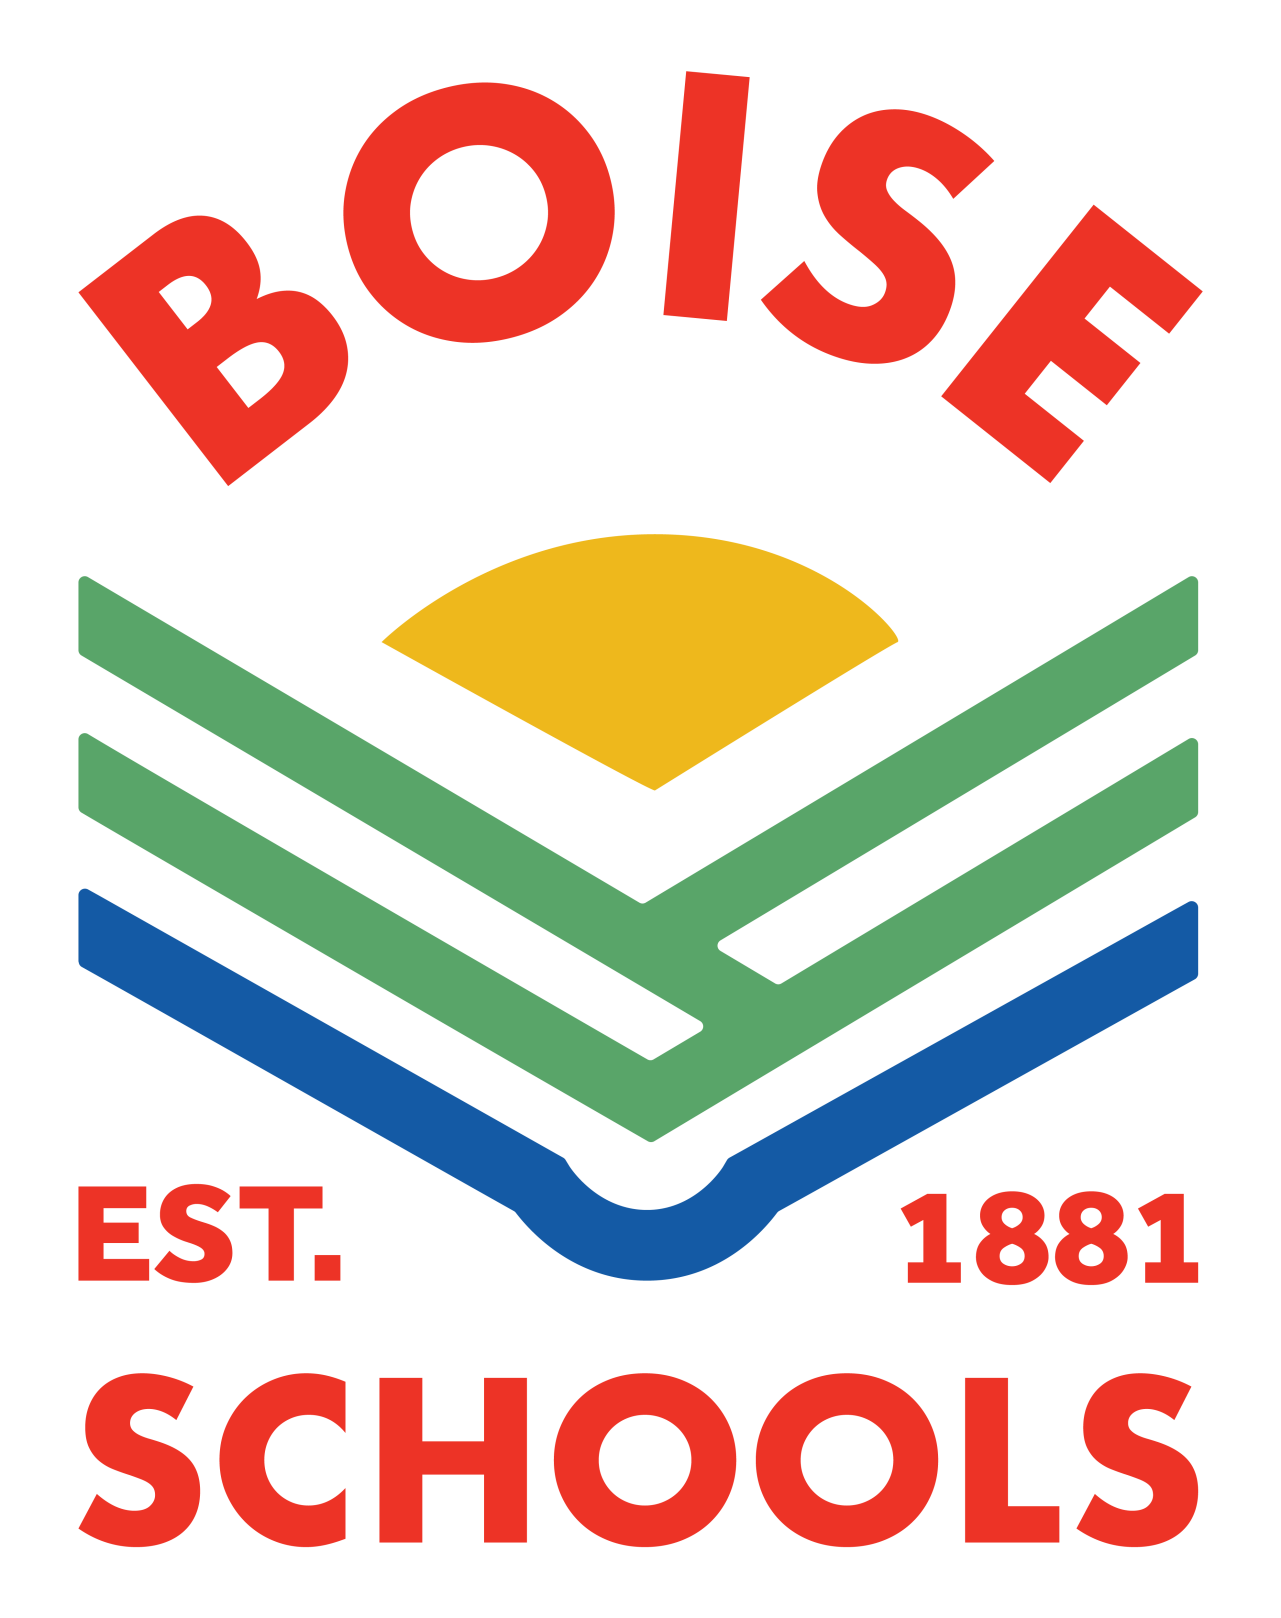 Boise School District releases letter regarding recent teacher suspension amid walkout Local News idahopress